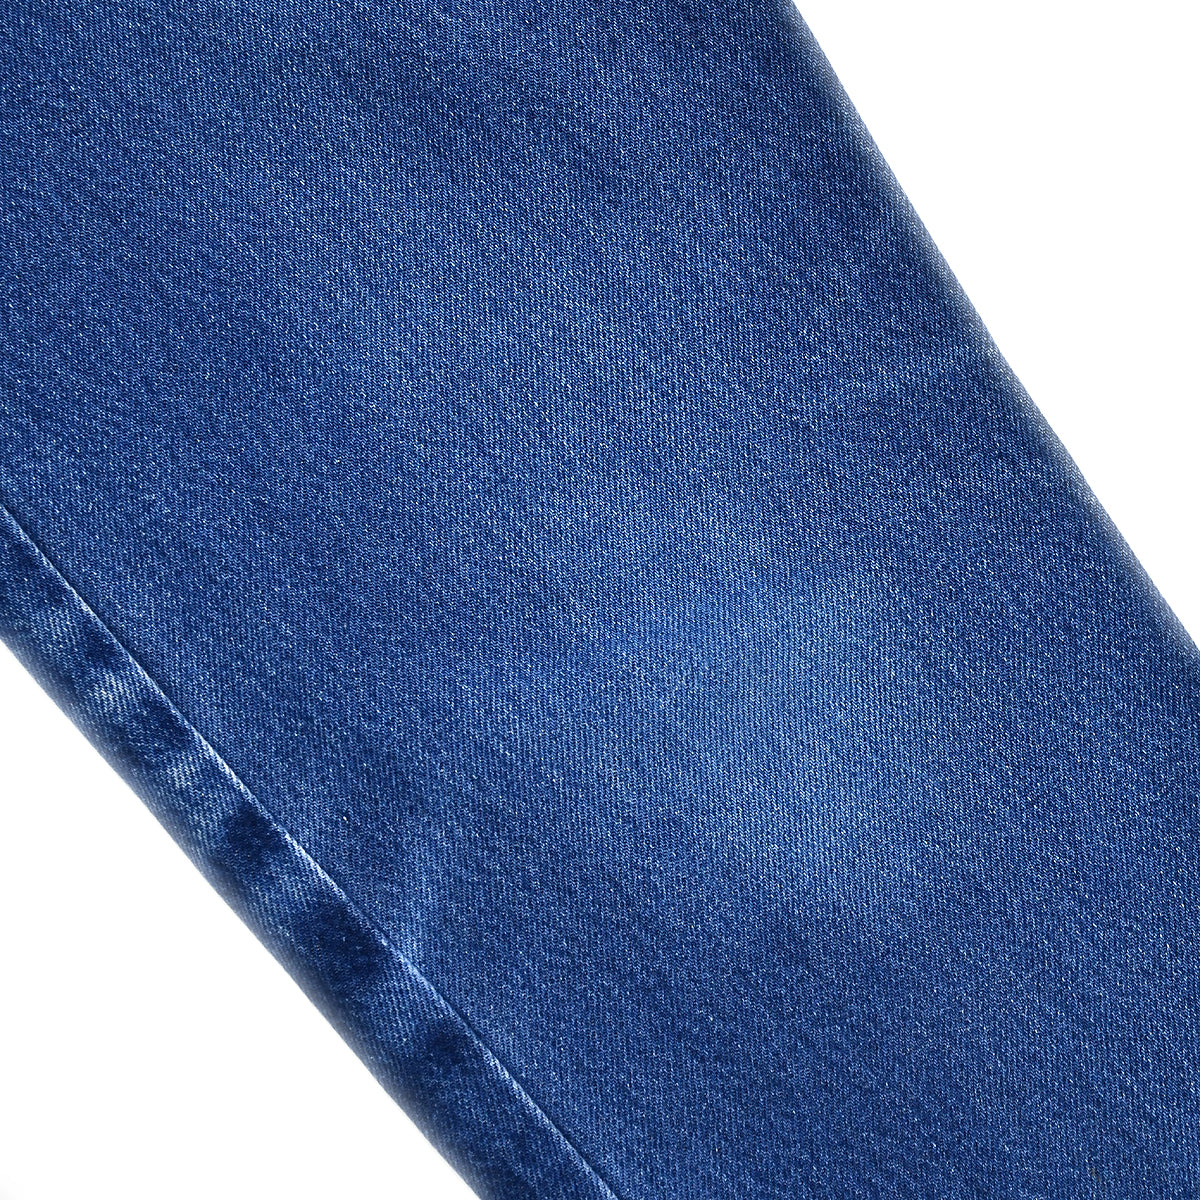 Yves Saint Laurent high-waisted tapered-leg jeans 